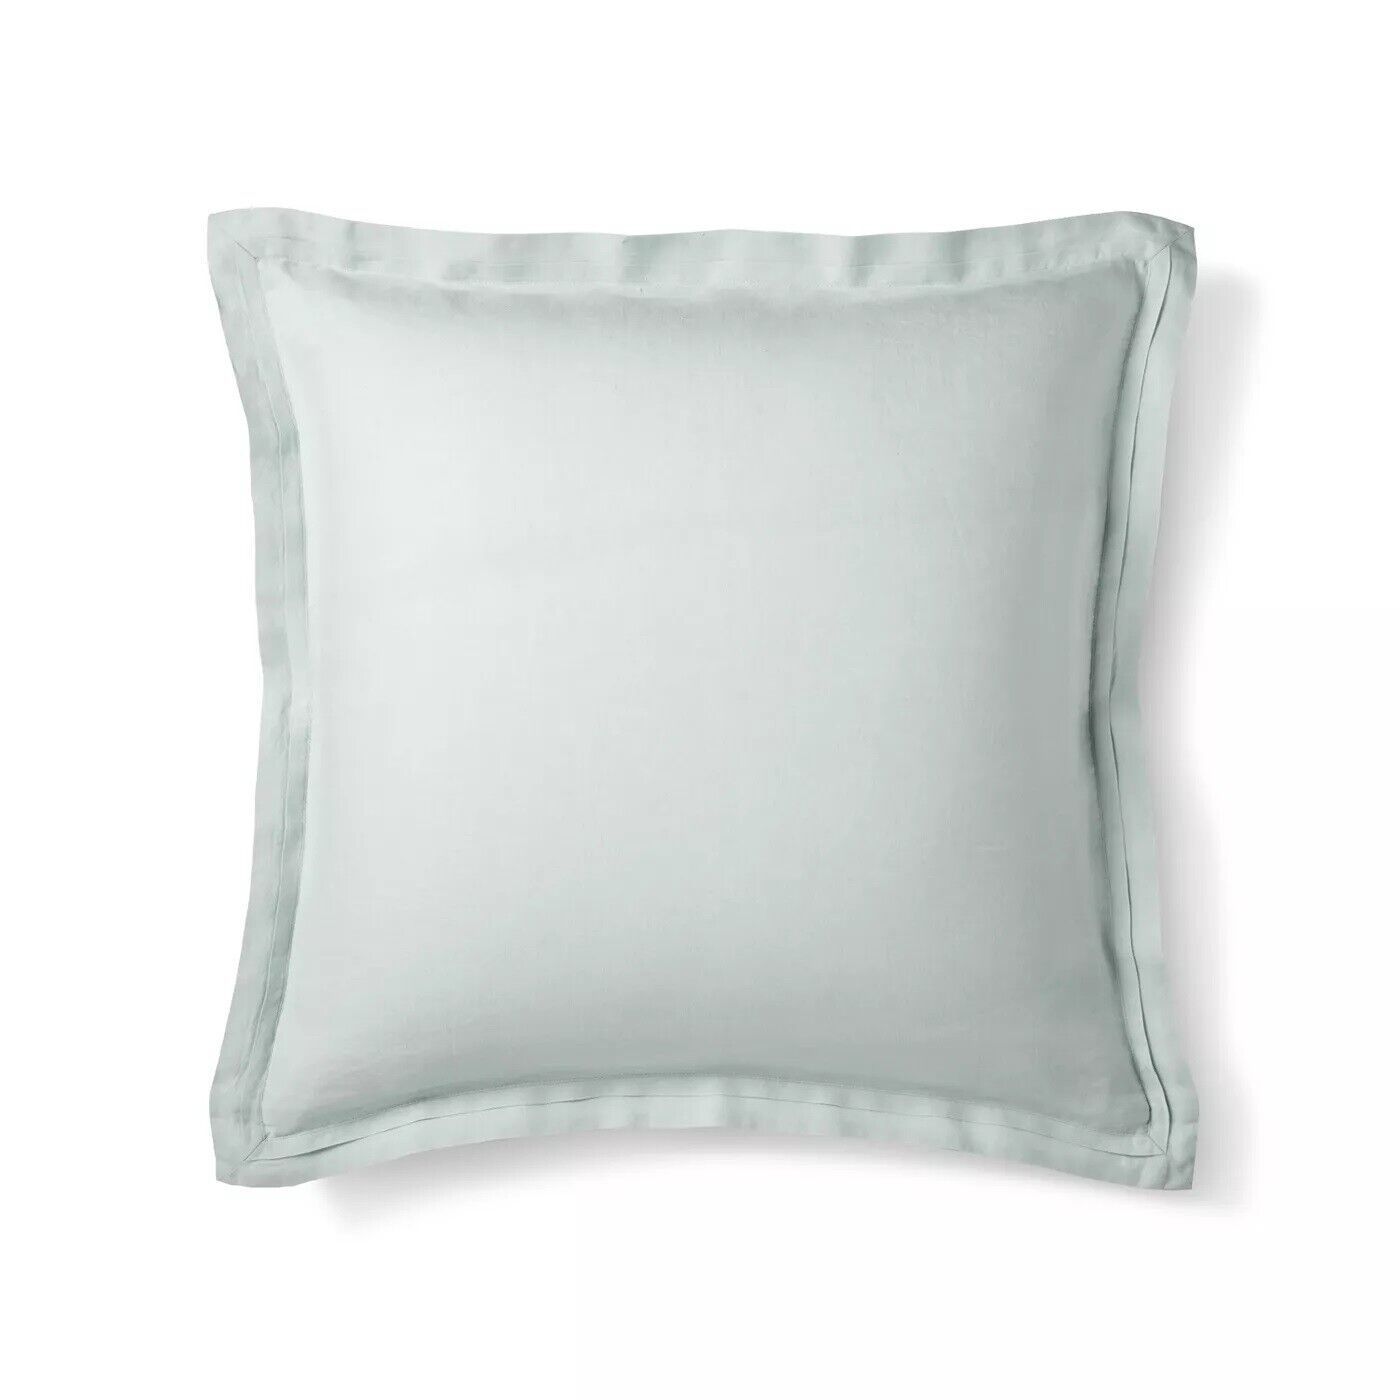 Primary image for Pillow Sham Fieldcrest King Lightweight Grey  26" x 26"  100% Linen